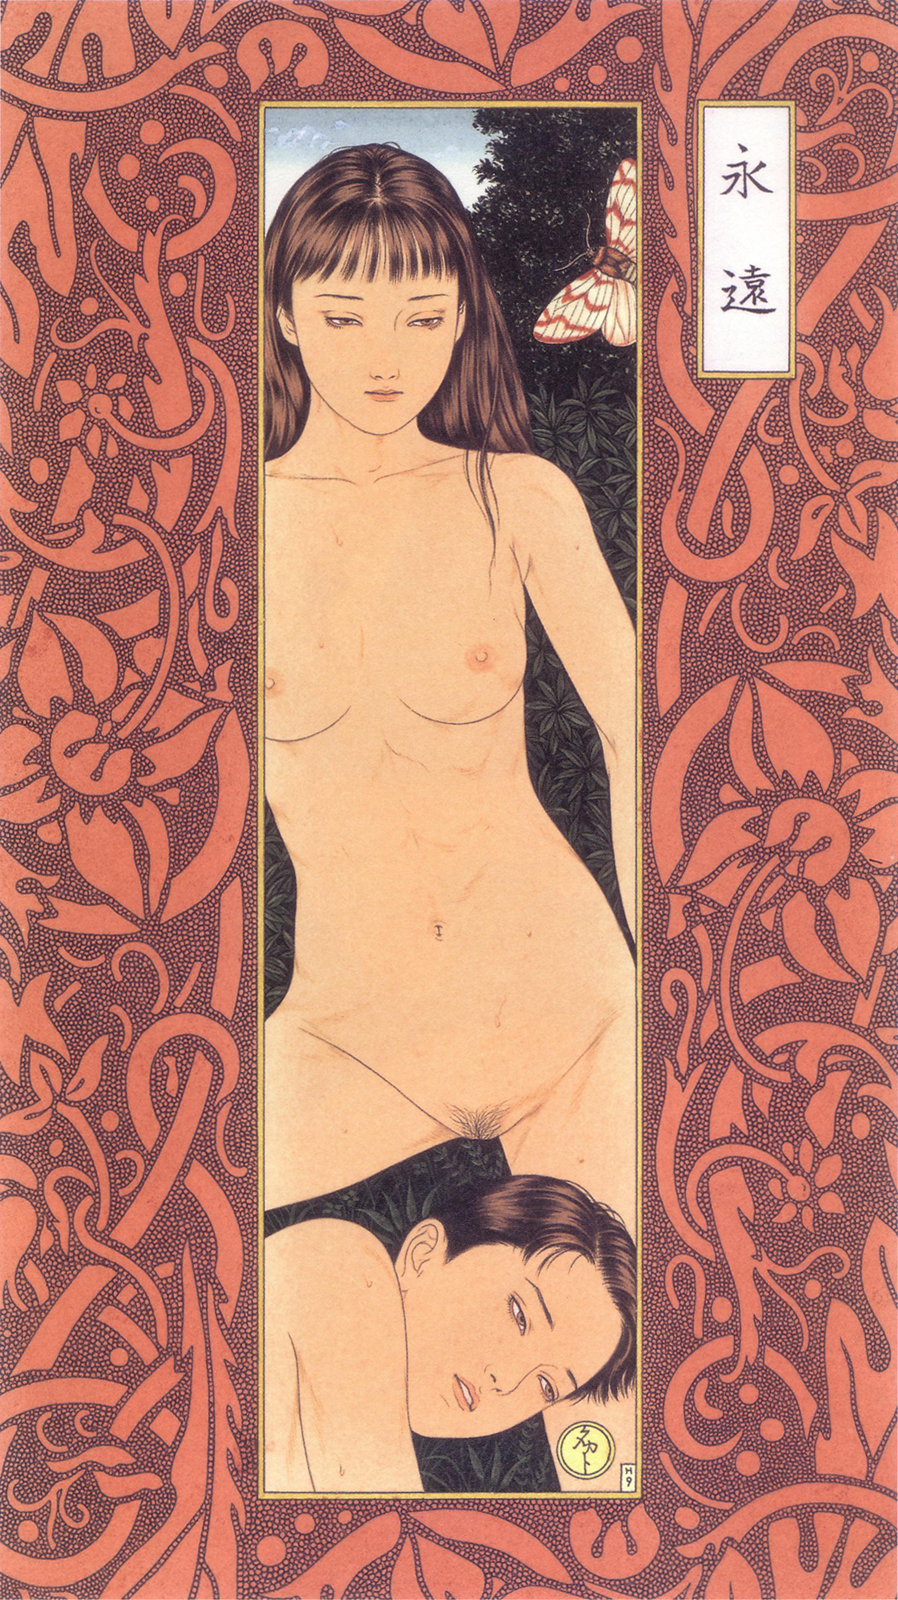 takato-yamamoto-ilustração-sexo-erotismo-sadomasoquismo-bondage-dionisio-arte-12